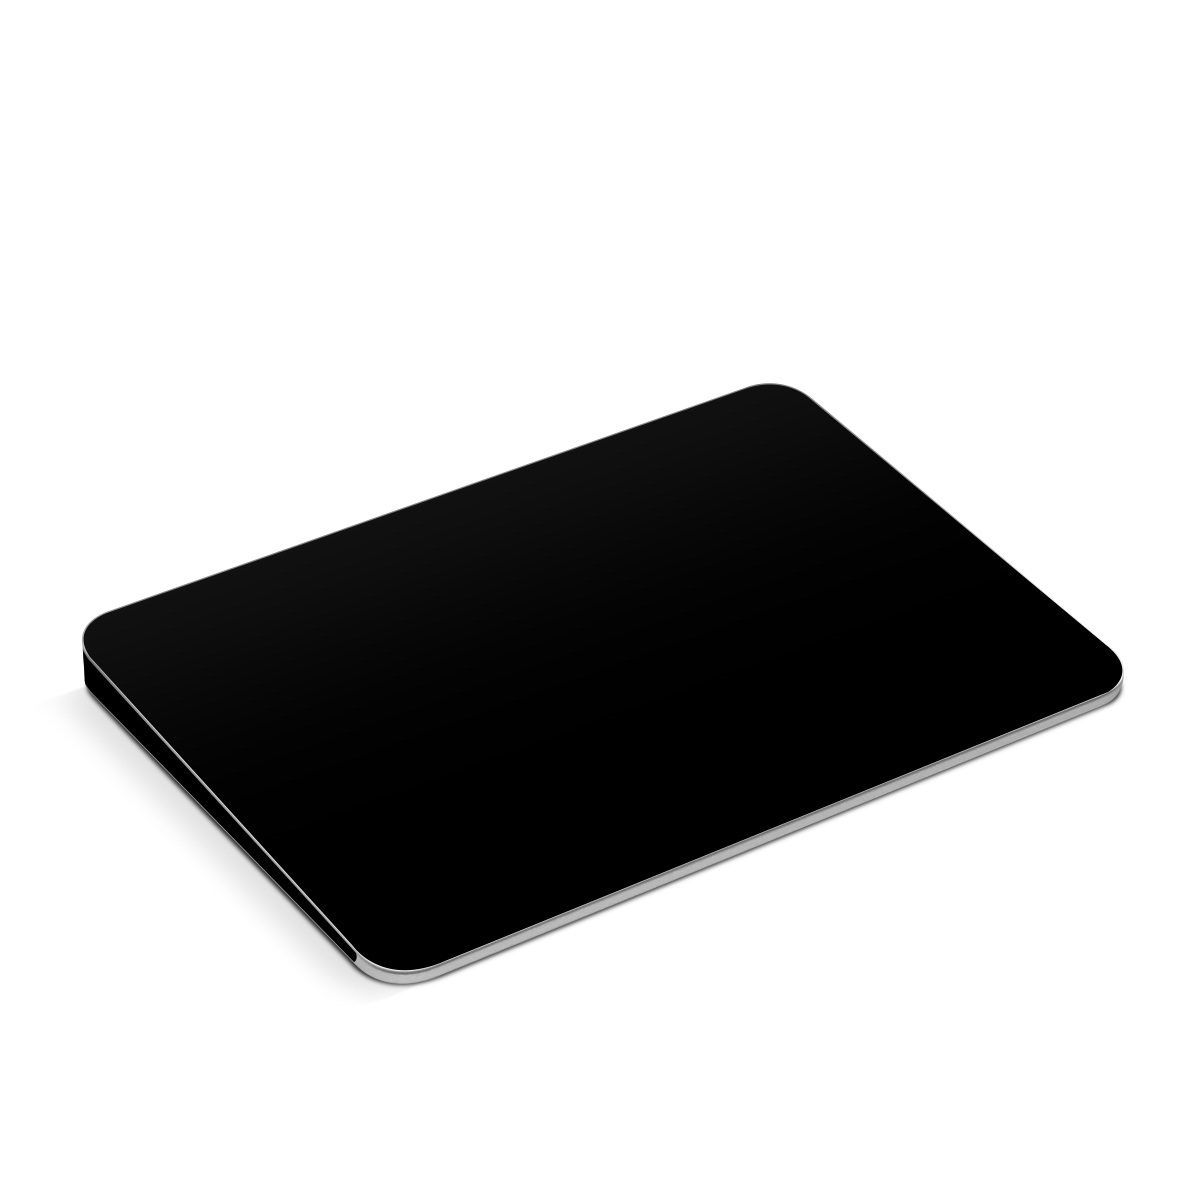 Magic Trackpad Skin - Solid State Black (Image 1)